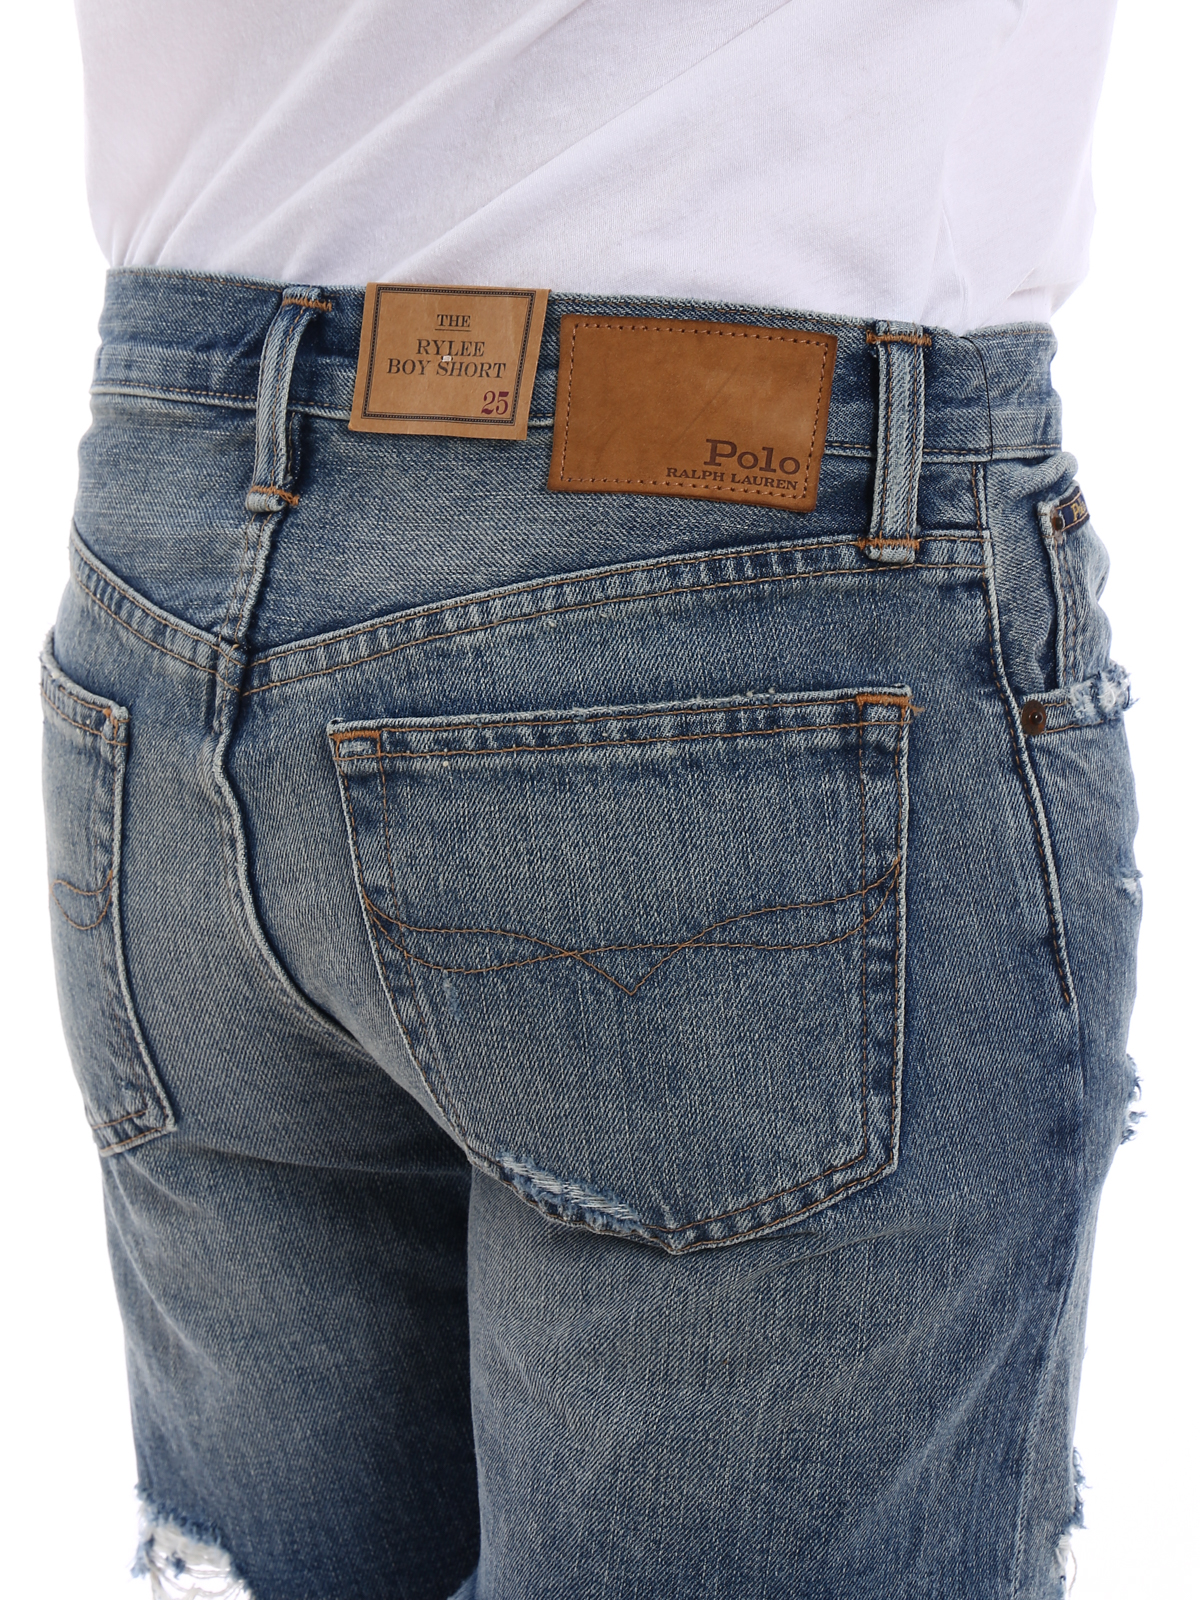 ralph lauren polo jean shorts